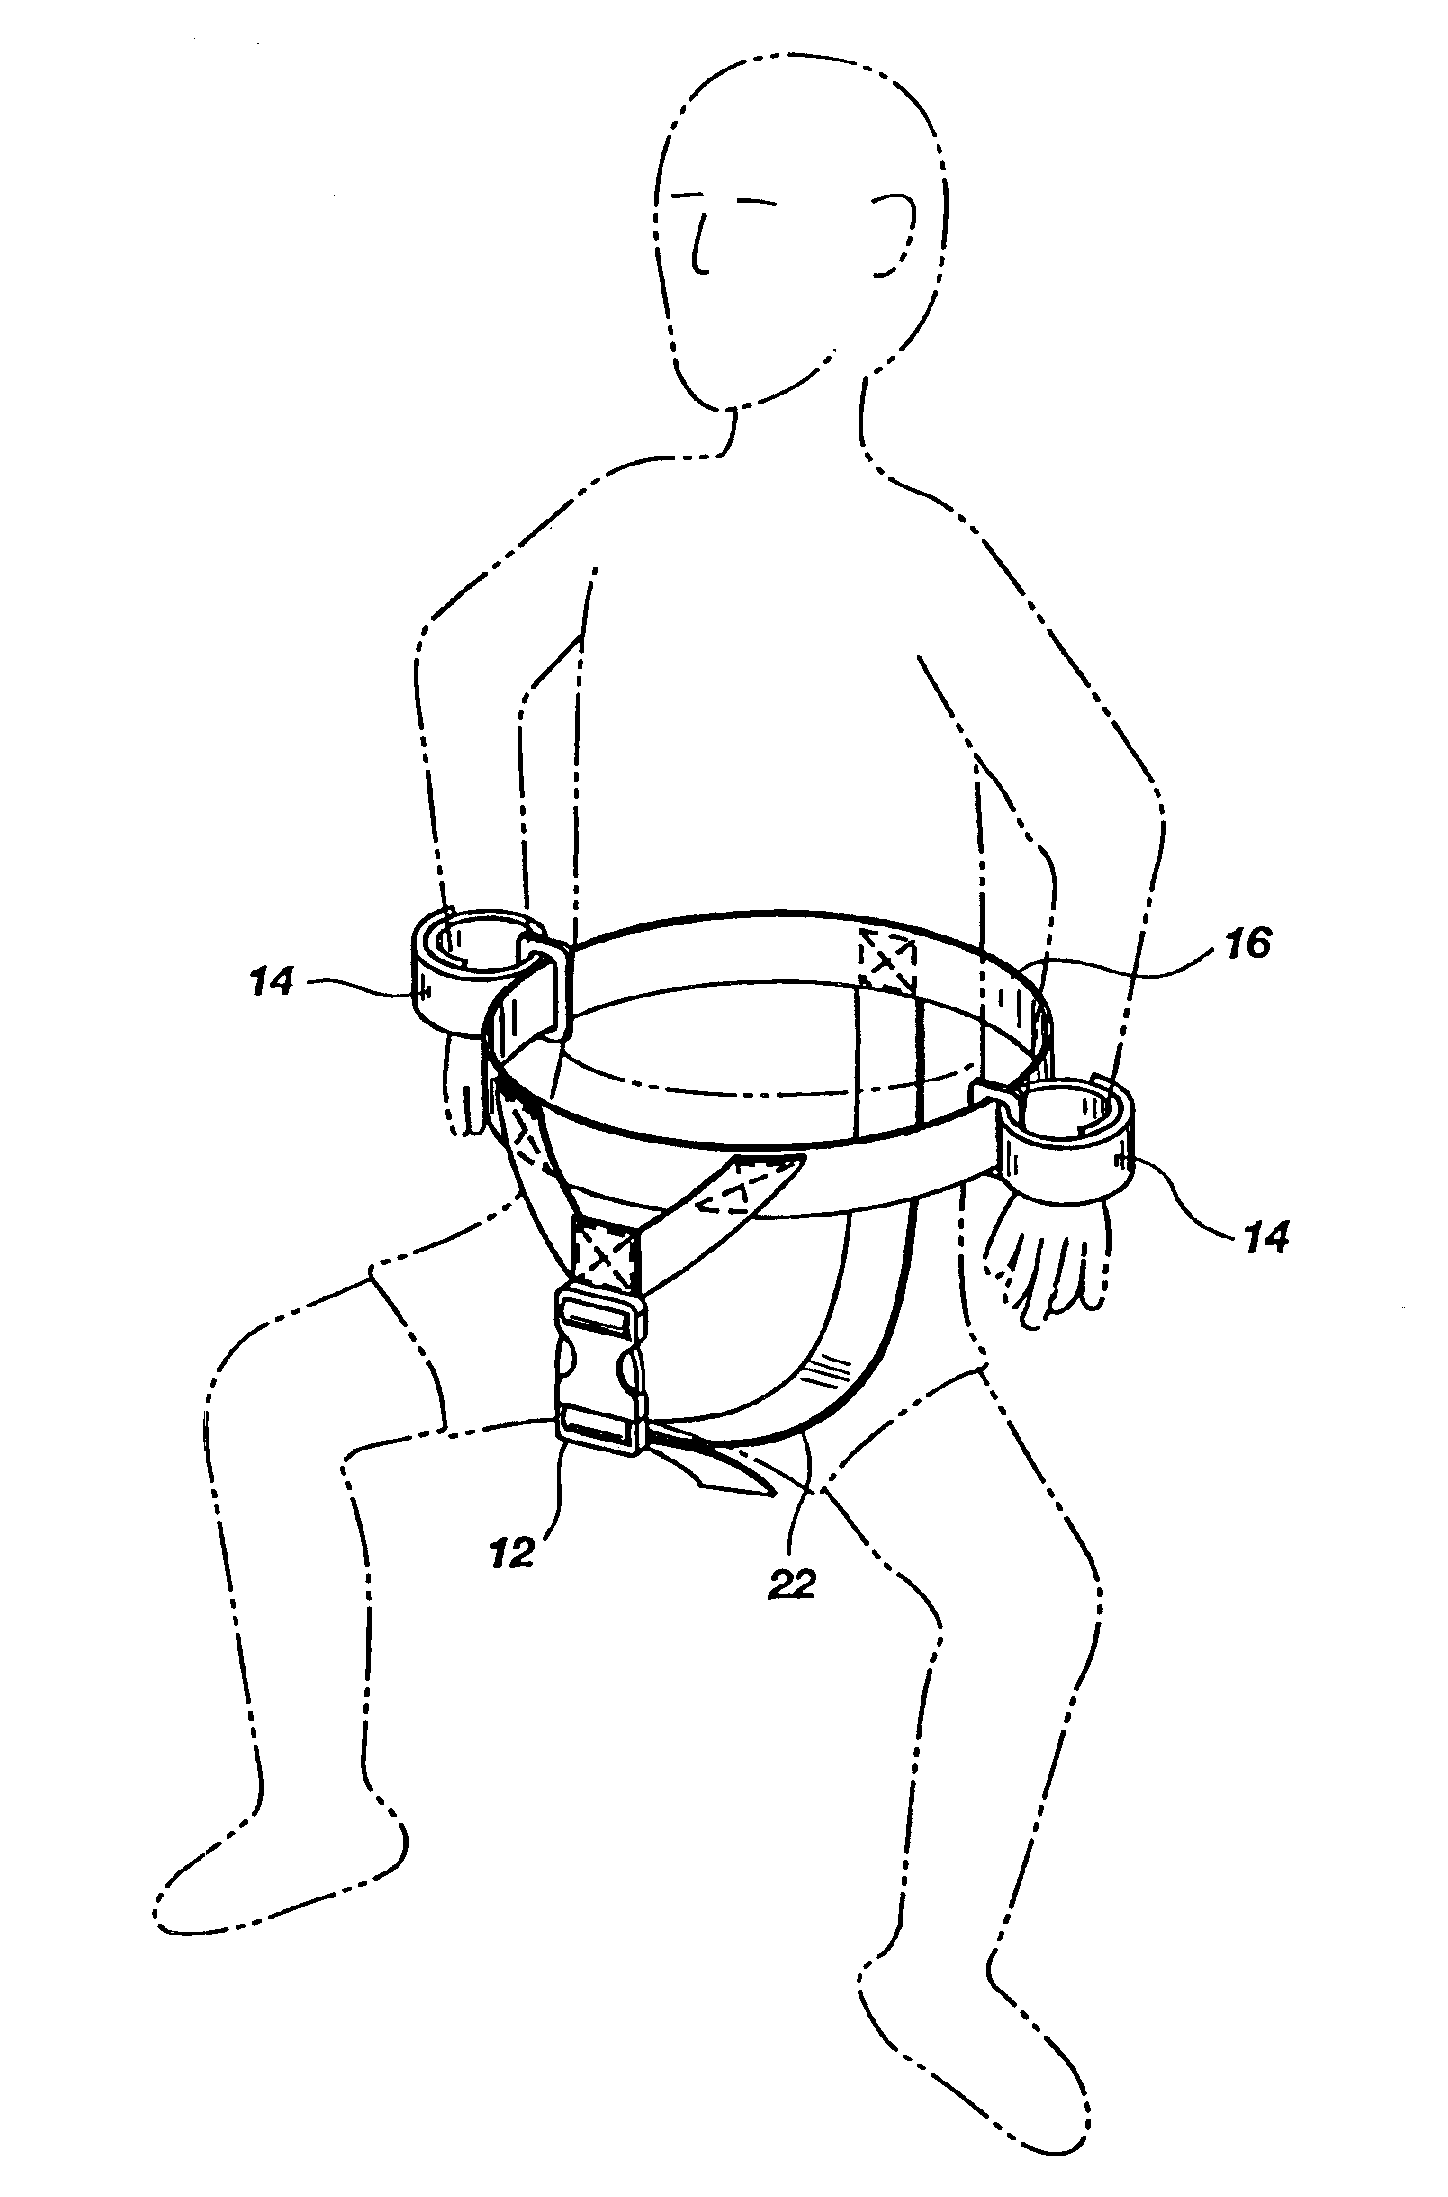 Medical arm restraining device